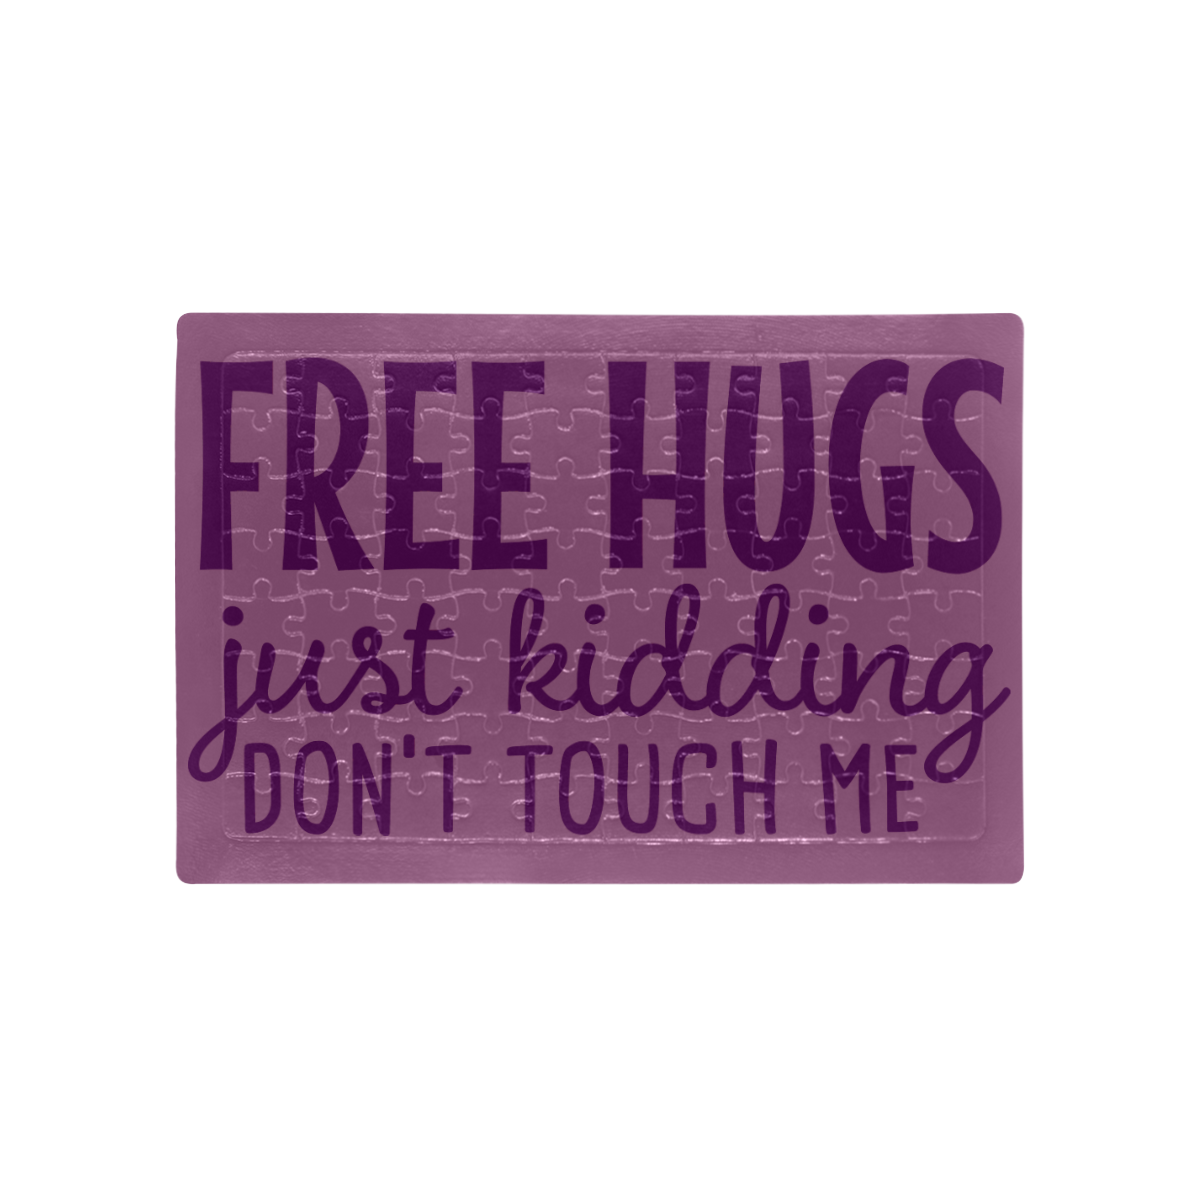 Free Hugs - Kidding - Self-Quarantine 2020 - cute goth purple A4 Size Jigsaw Puzzle (Set of 80 Pieces)